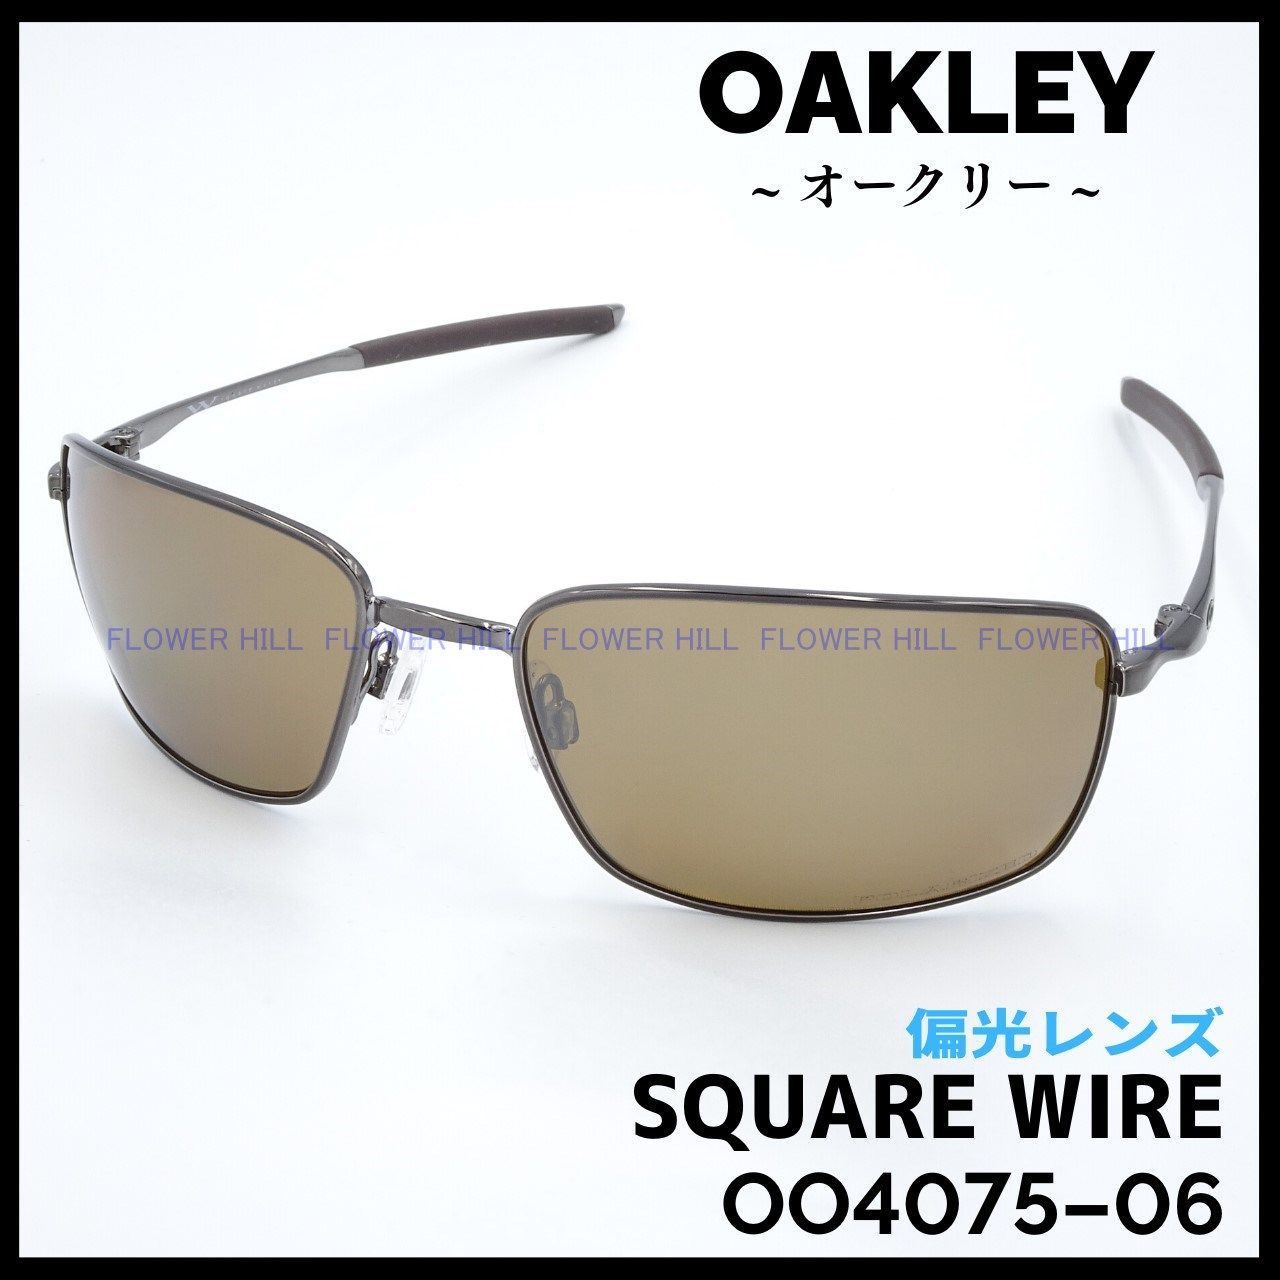 OAKLEY オークリー 偏光サングラス メタルフレーム SQUARE WIRE-